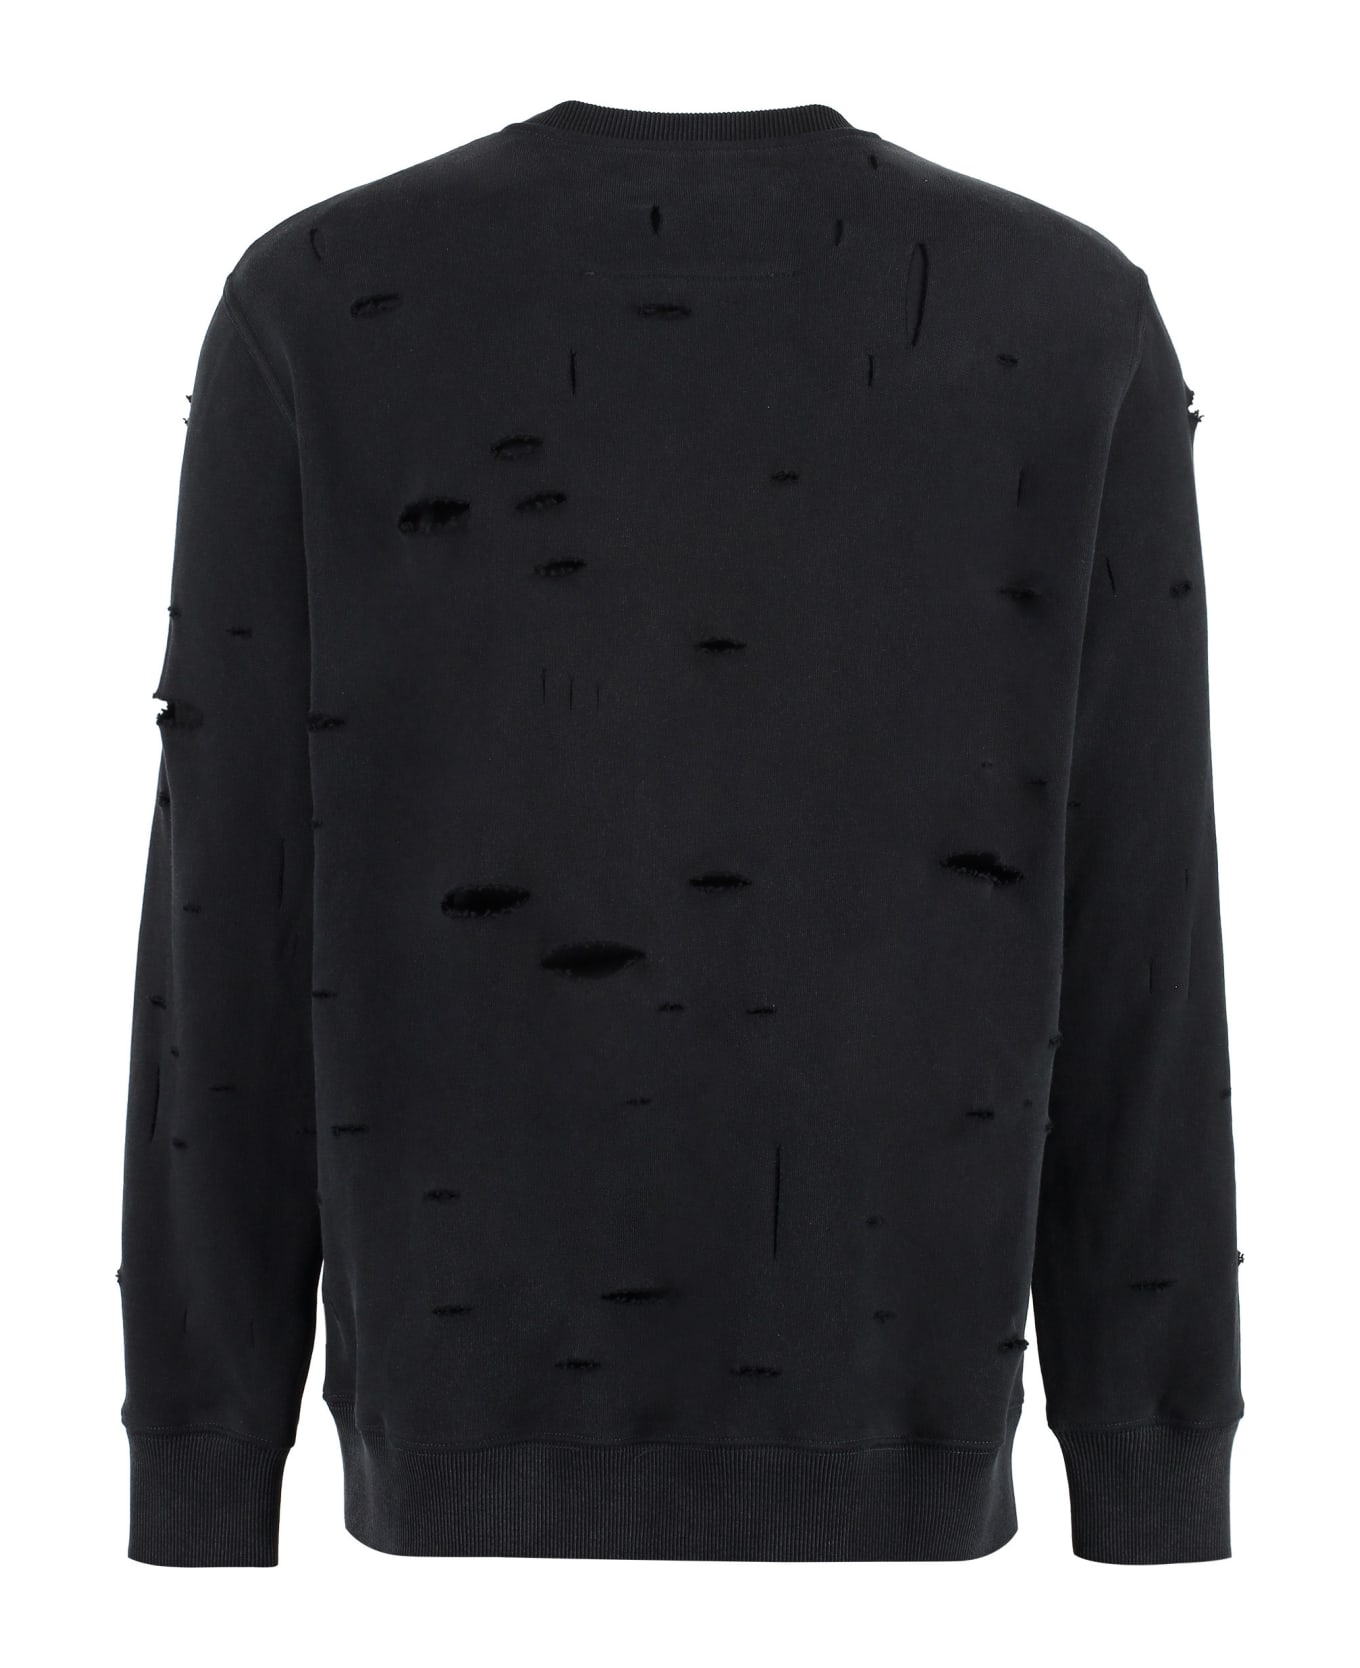 Givenchy Cotton Crew-neck Sweatshirt - black